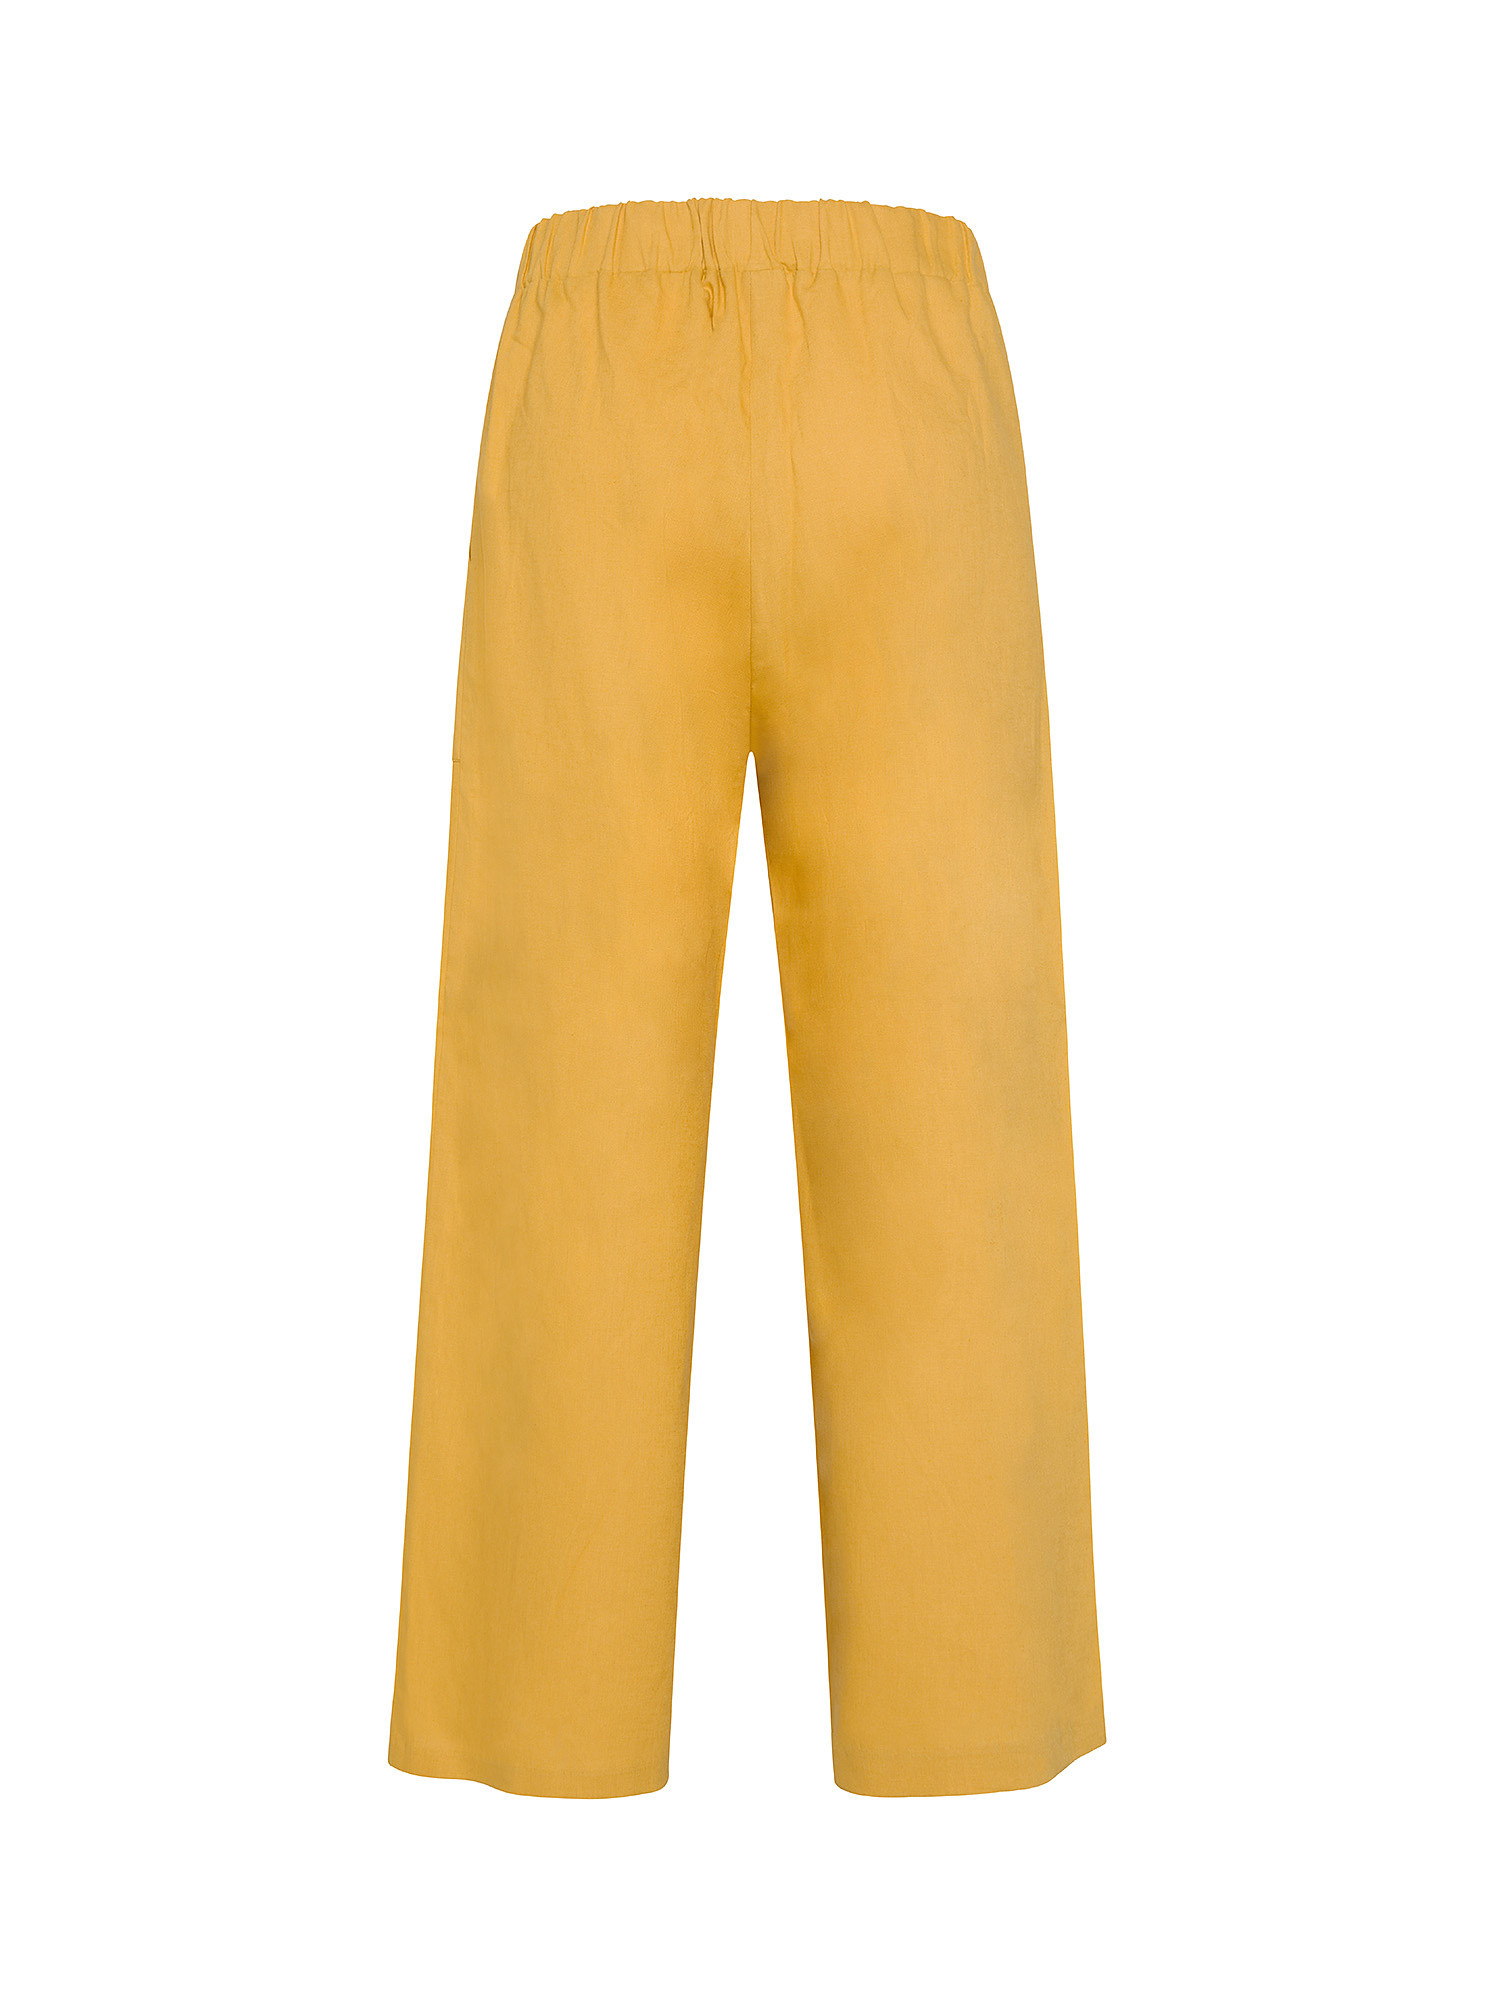 Koan - Wide-leg trousers in linen blend, Mustard Yellow, large image number 1